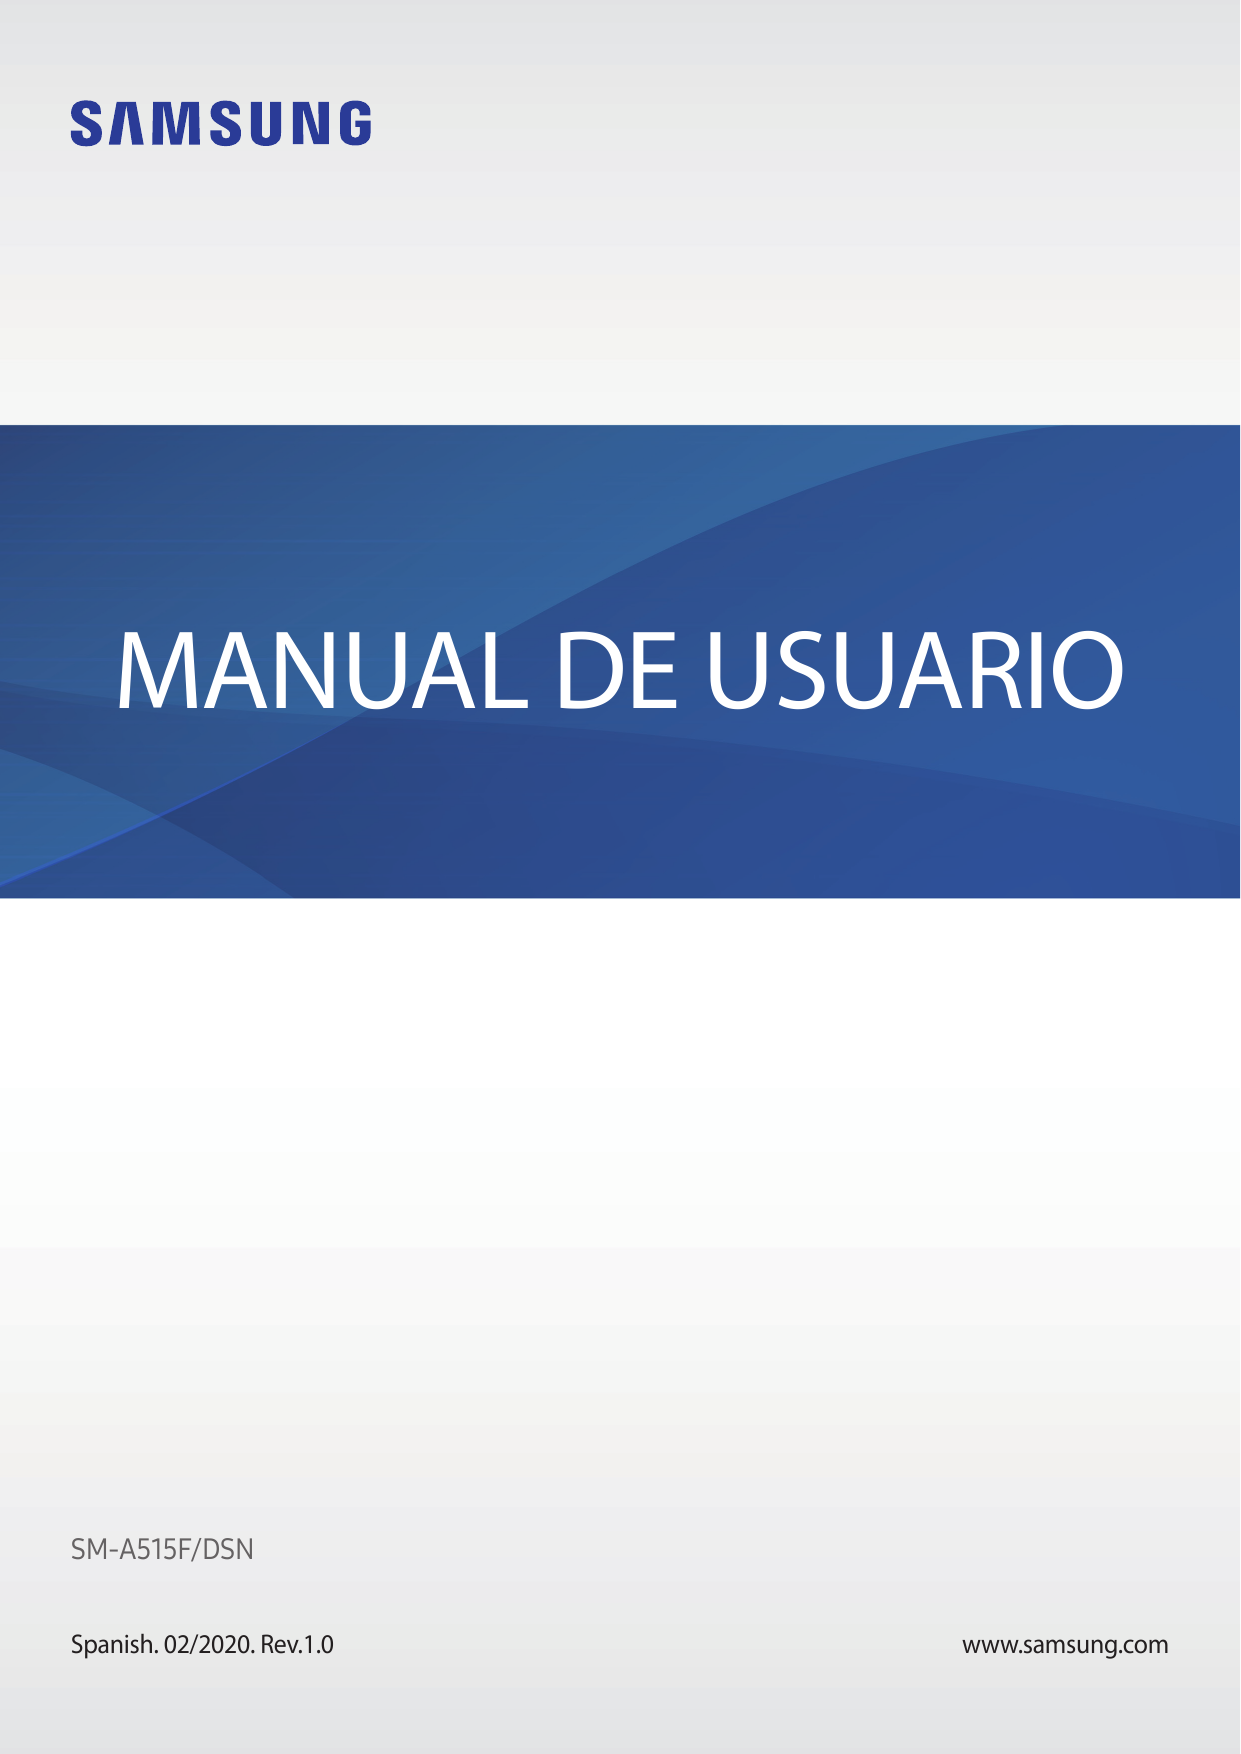 MANUAL DE USUARIOSM-A515F/DSNSpanish. 02/2020. Rev.1.0www.samsung.com